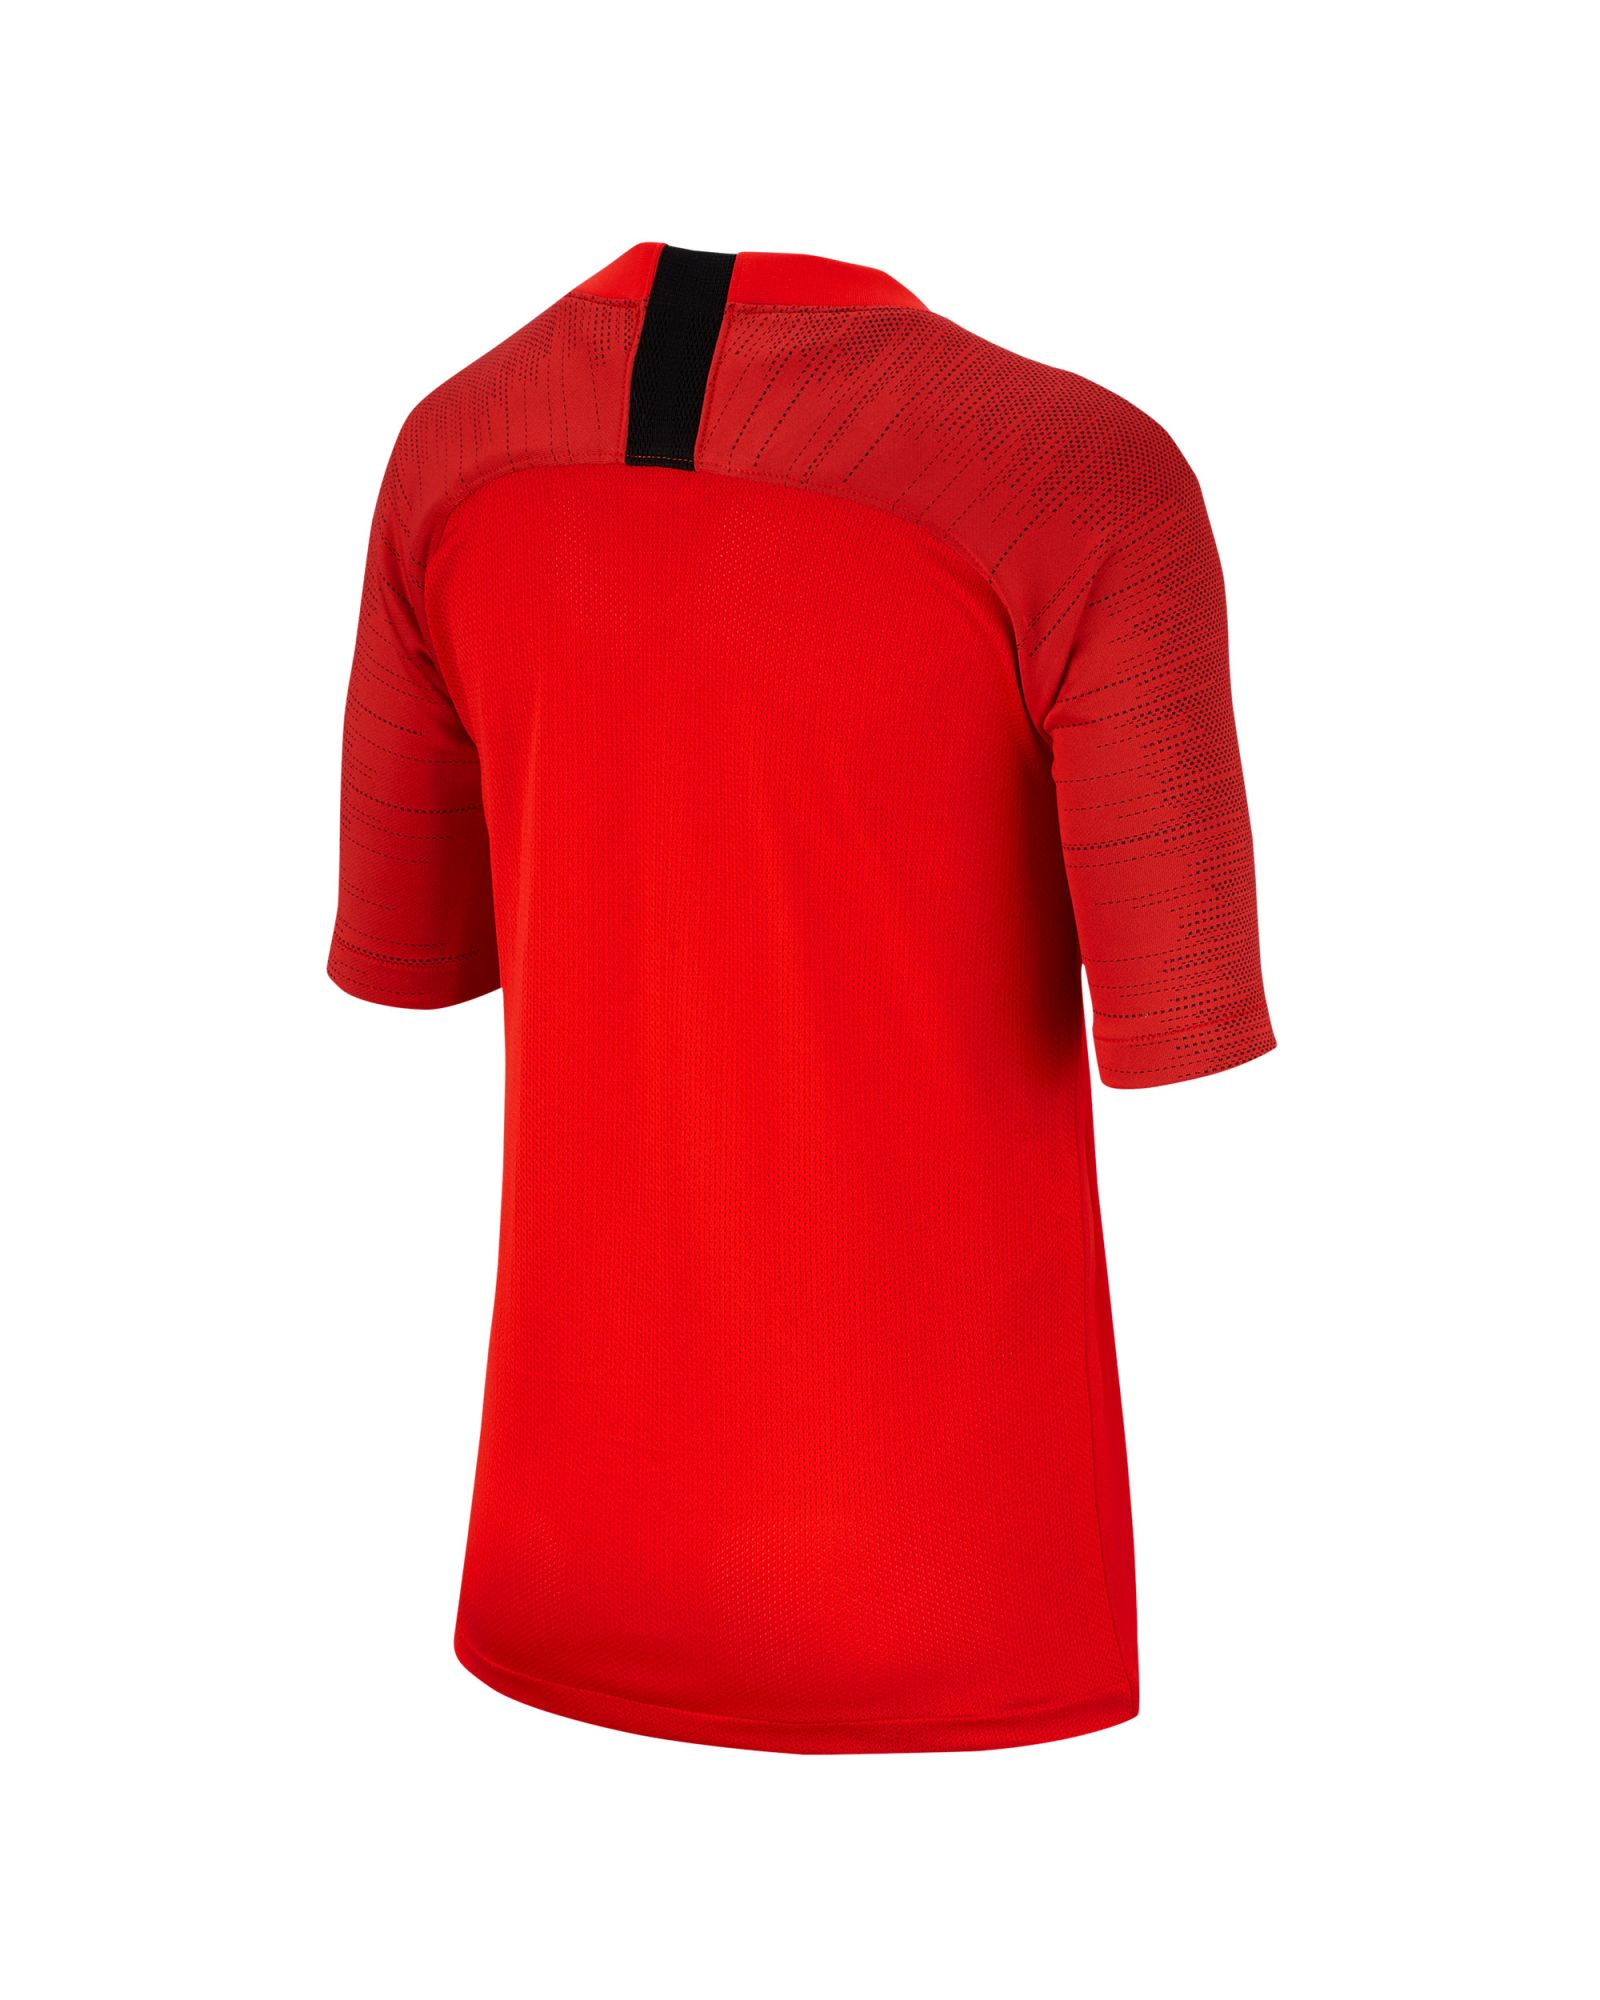 Camiseta de Training Atlético de Madrid 2019/2020 Breathe Squad Junior Rojo - Fútbol Factory